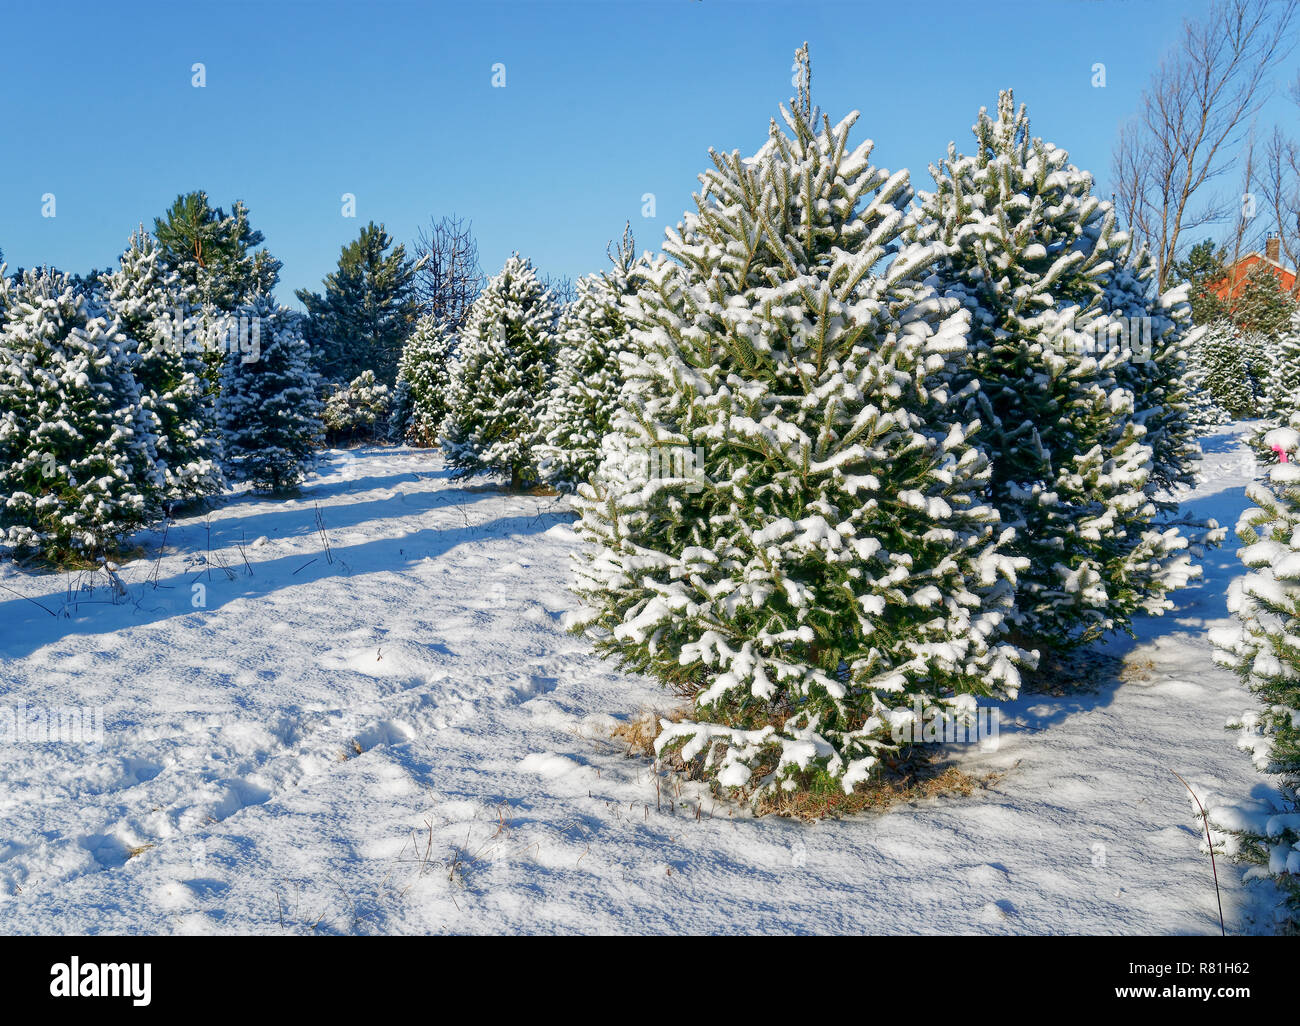 Snow covered trees at a Christmas tree farm. Stock Photo